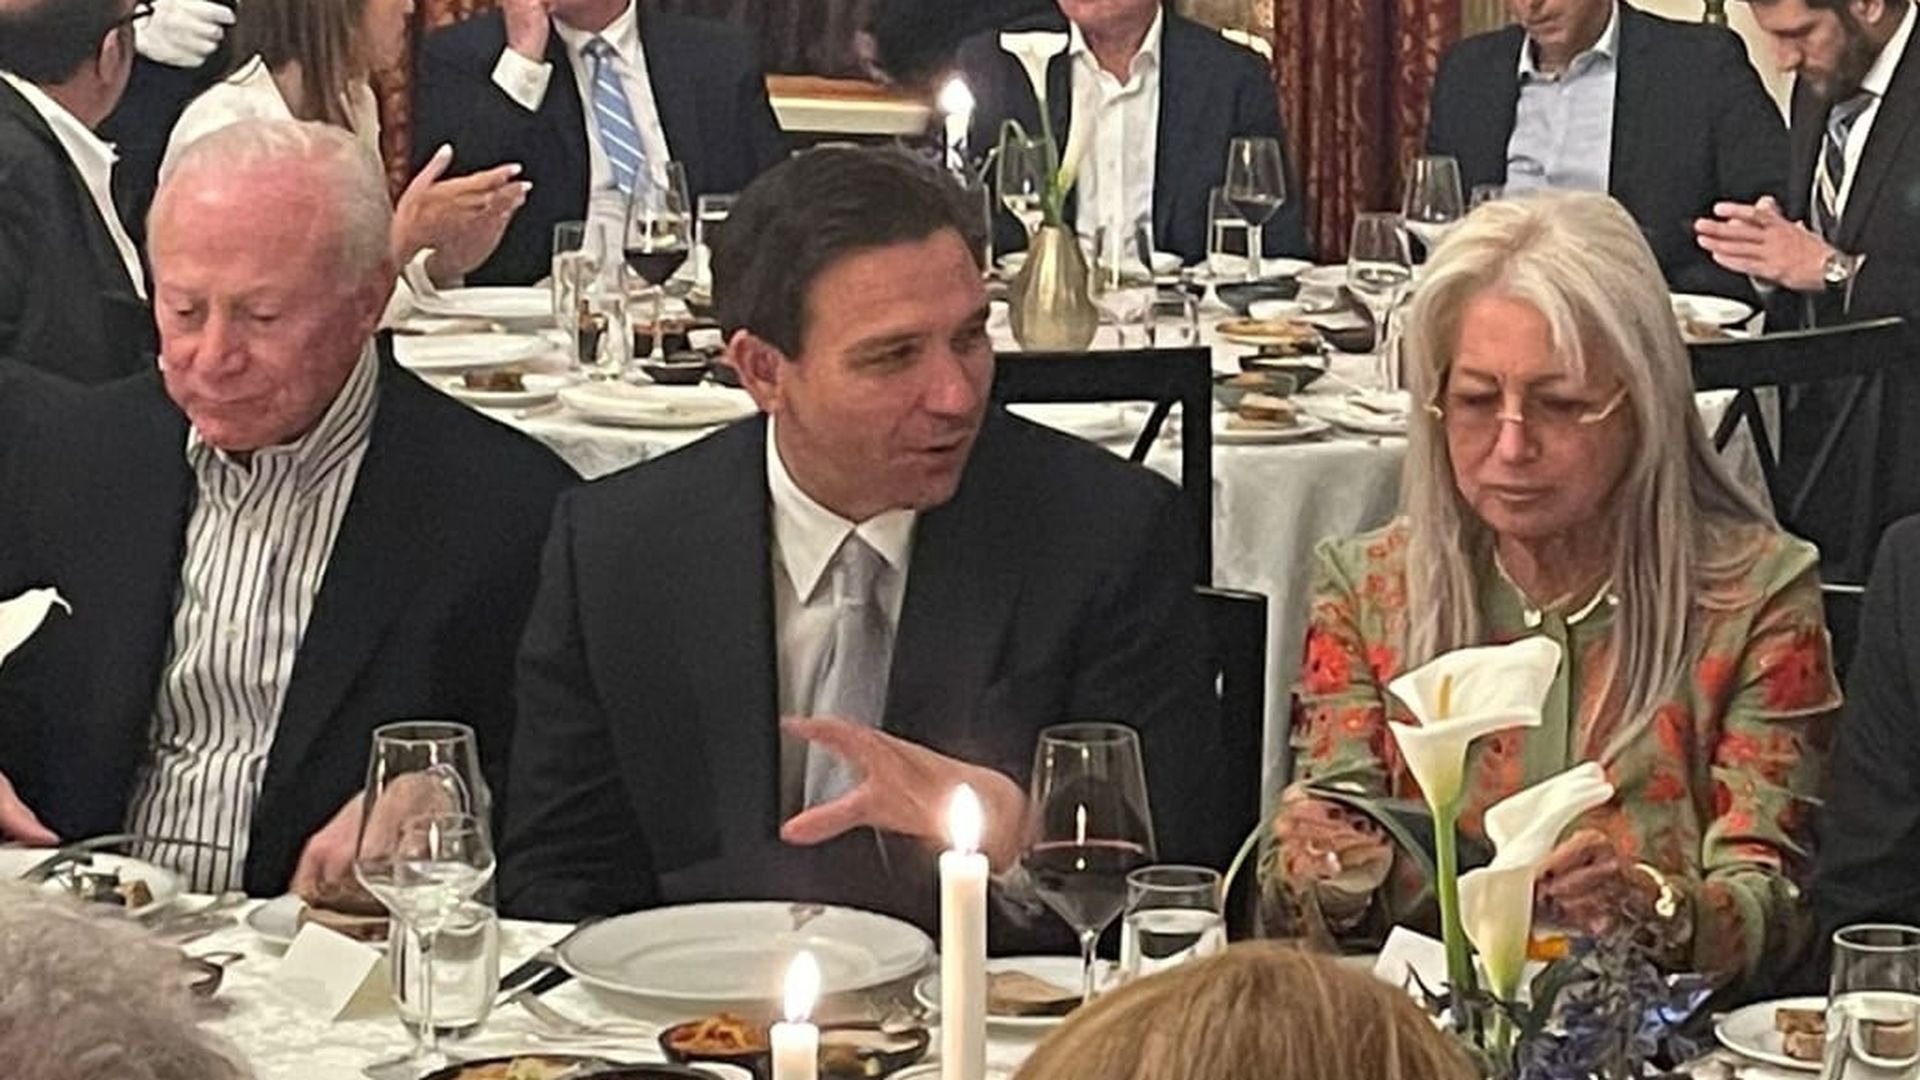 Florida Gov. Ron DeSantis sits between Miriam Adelson and Larry Mizel at a dinner in Jerusalem.